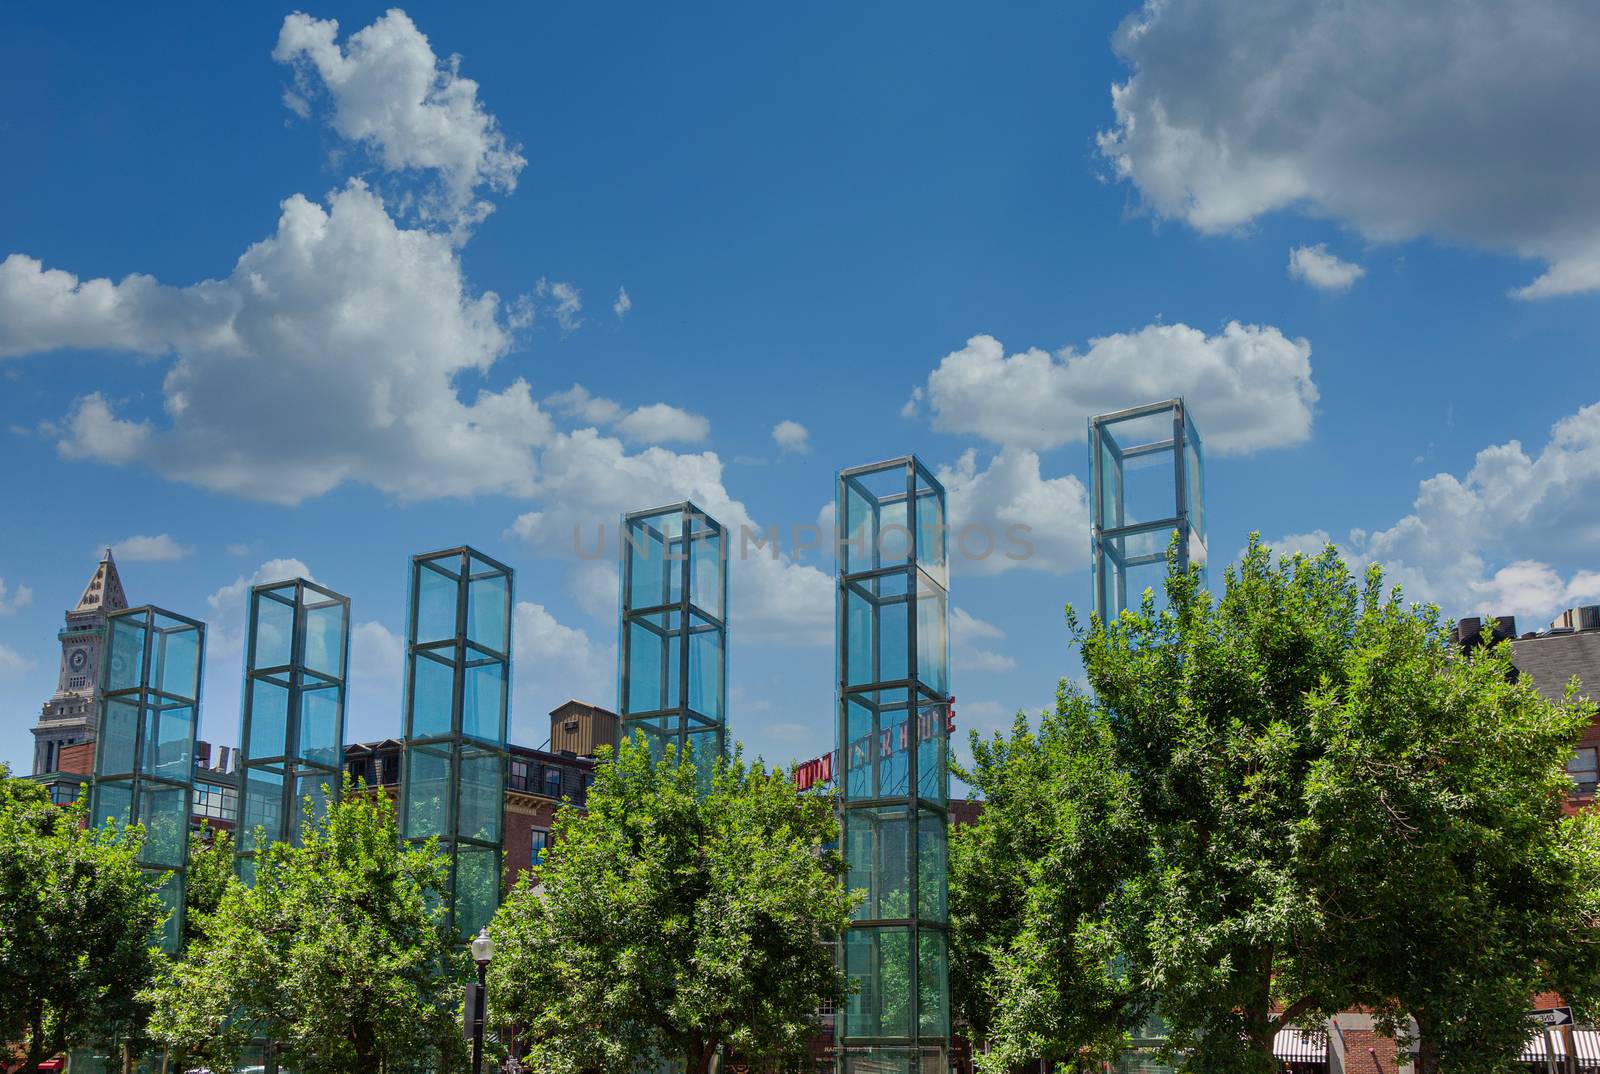 Glass Columns in Boston by dbvirago